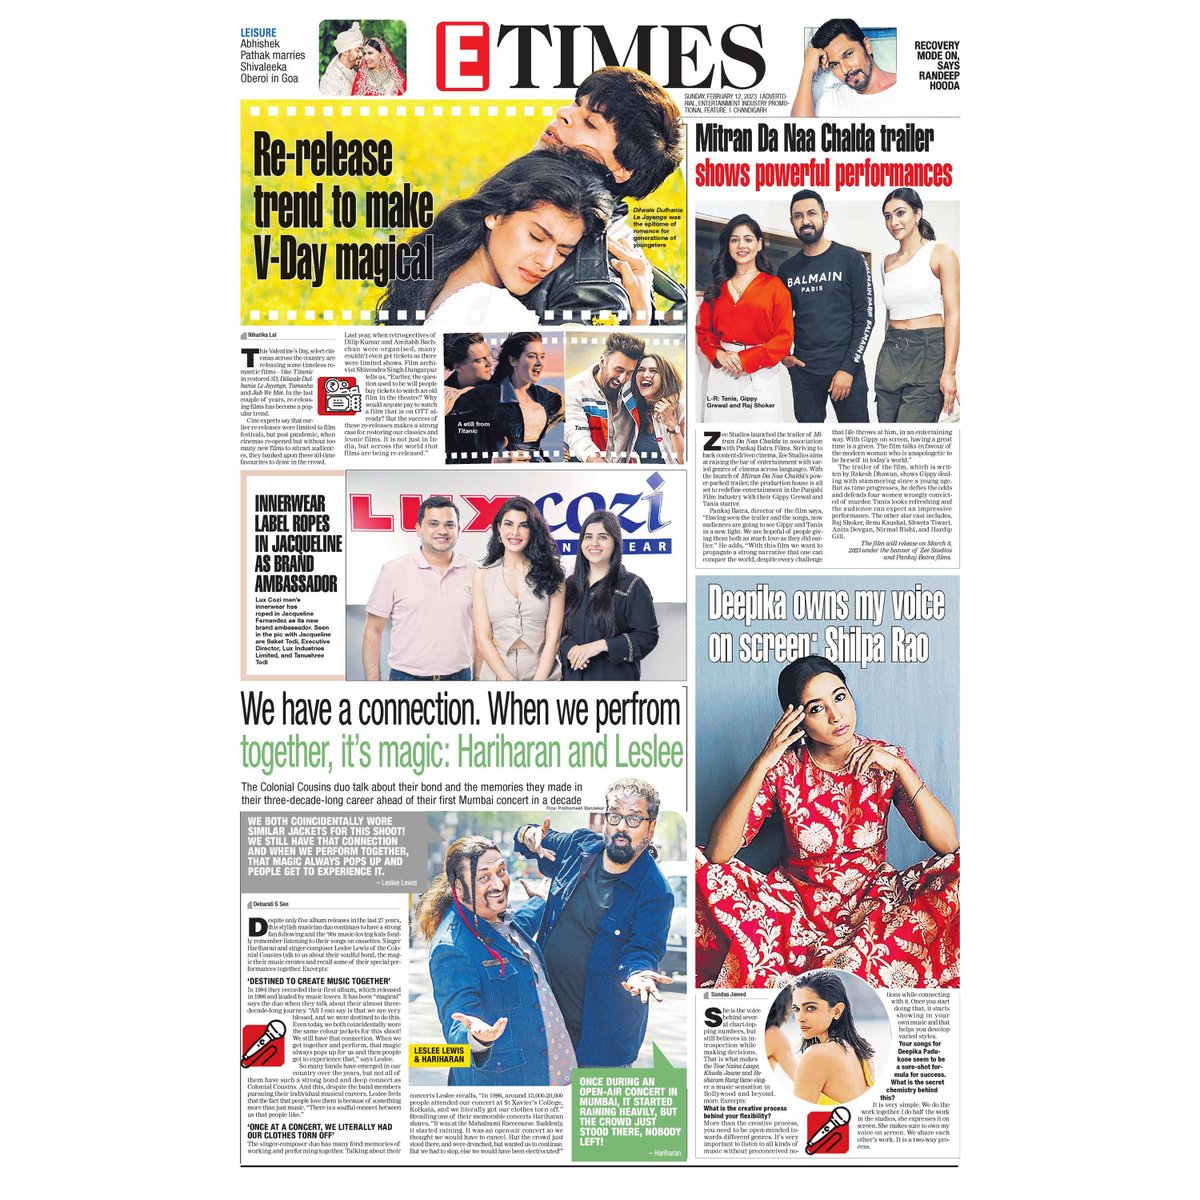 Are you missing #ETimes print edition? Log on to epaper.timesofindia.com to read...
#ValentinesDay #Shahrukhkhan #kajol #DDLJ #titanic #Tamasha #movies #Mitrandanaachalda #Gippygrewal #Tania #Rajshokar #shilparao #Deepikapadukone #hariharan #leslee #colonialcousins #music